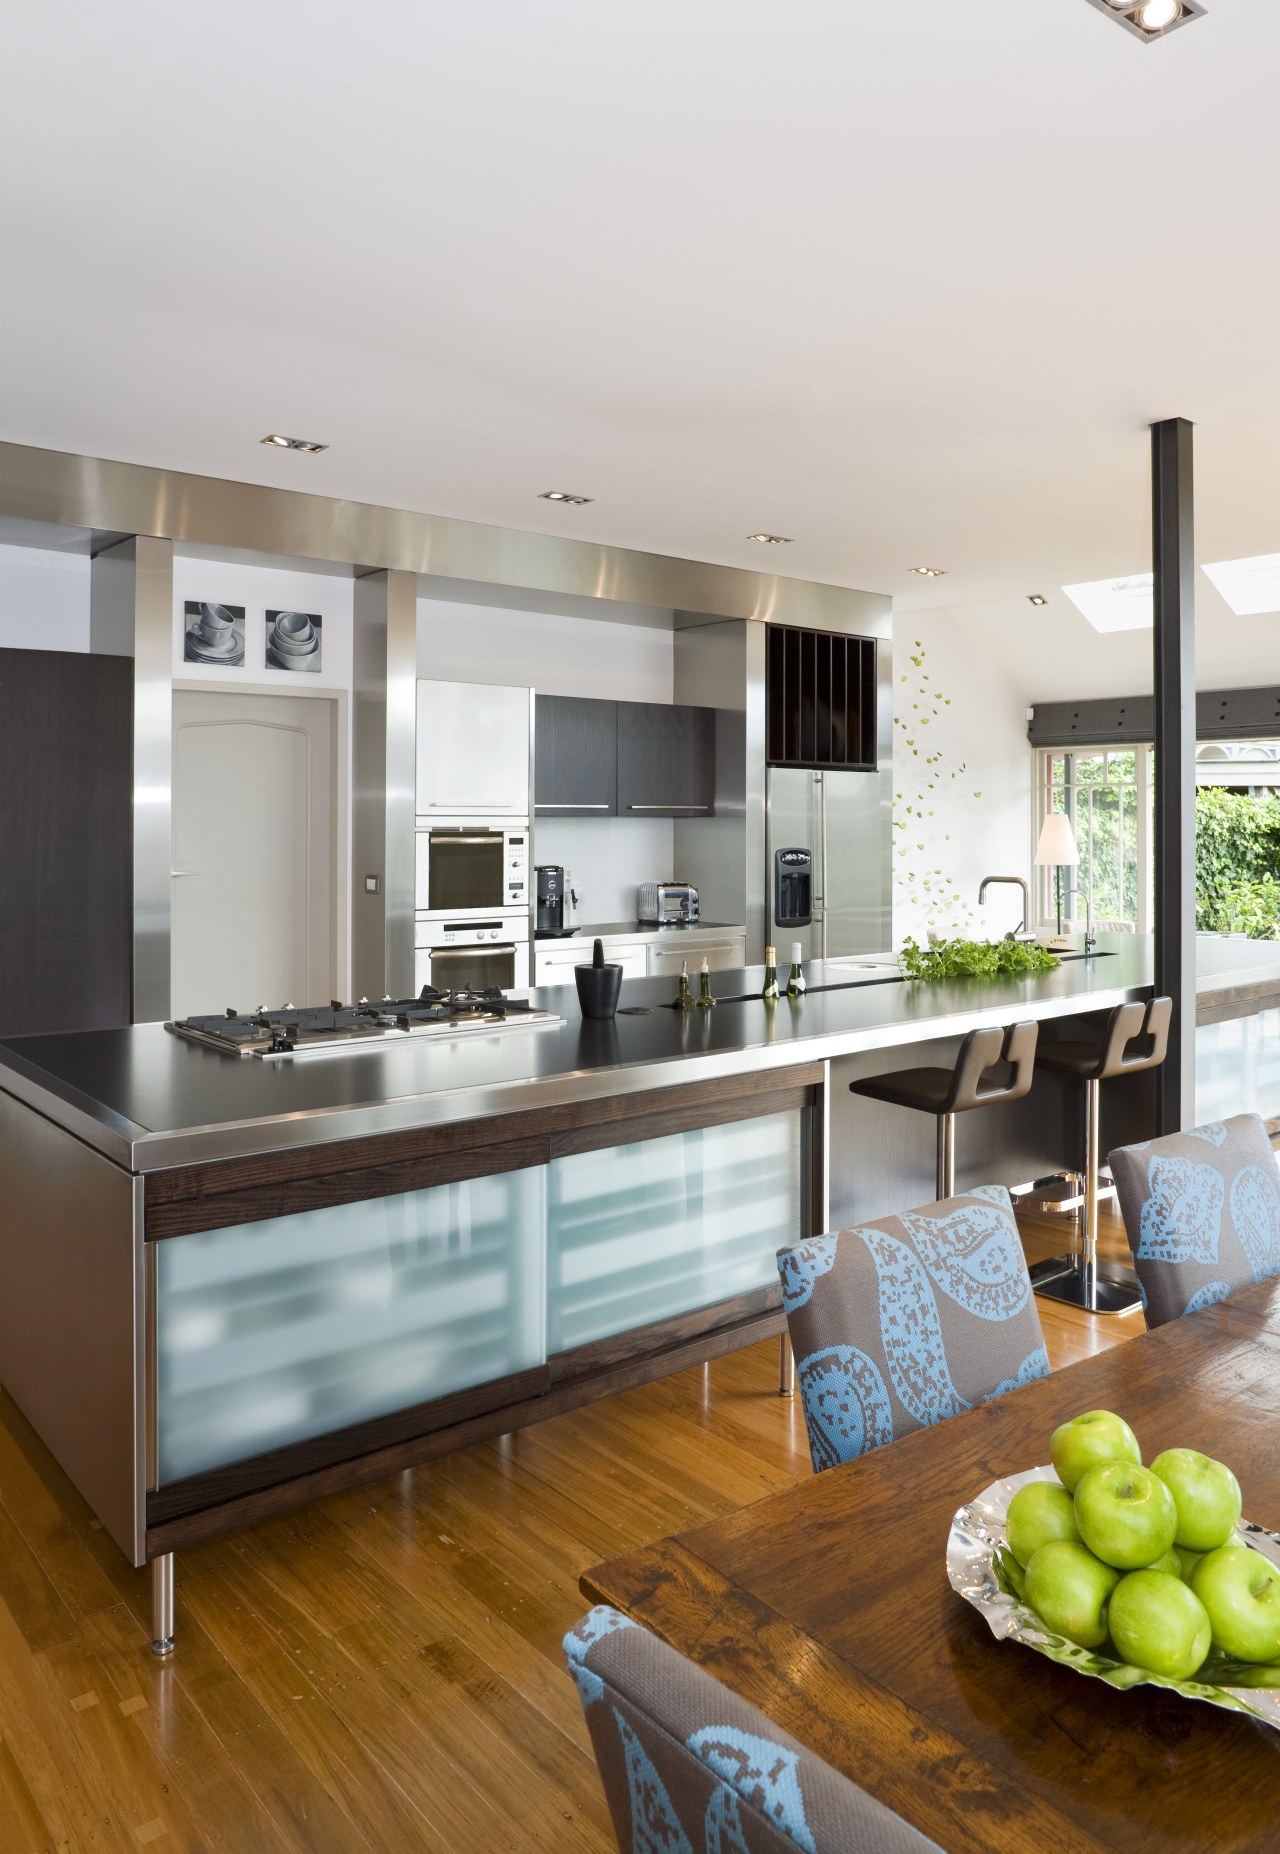 he kitchen, designed by architect Gordon Moller and countertop, cuisine classique, interior design, kitchen, real estate, white